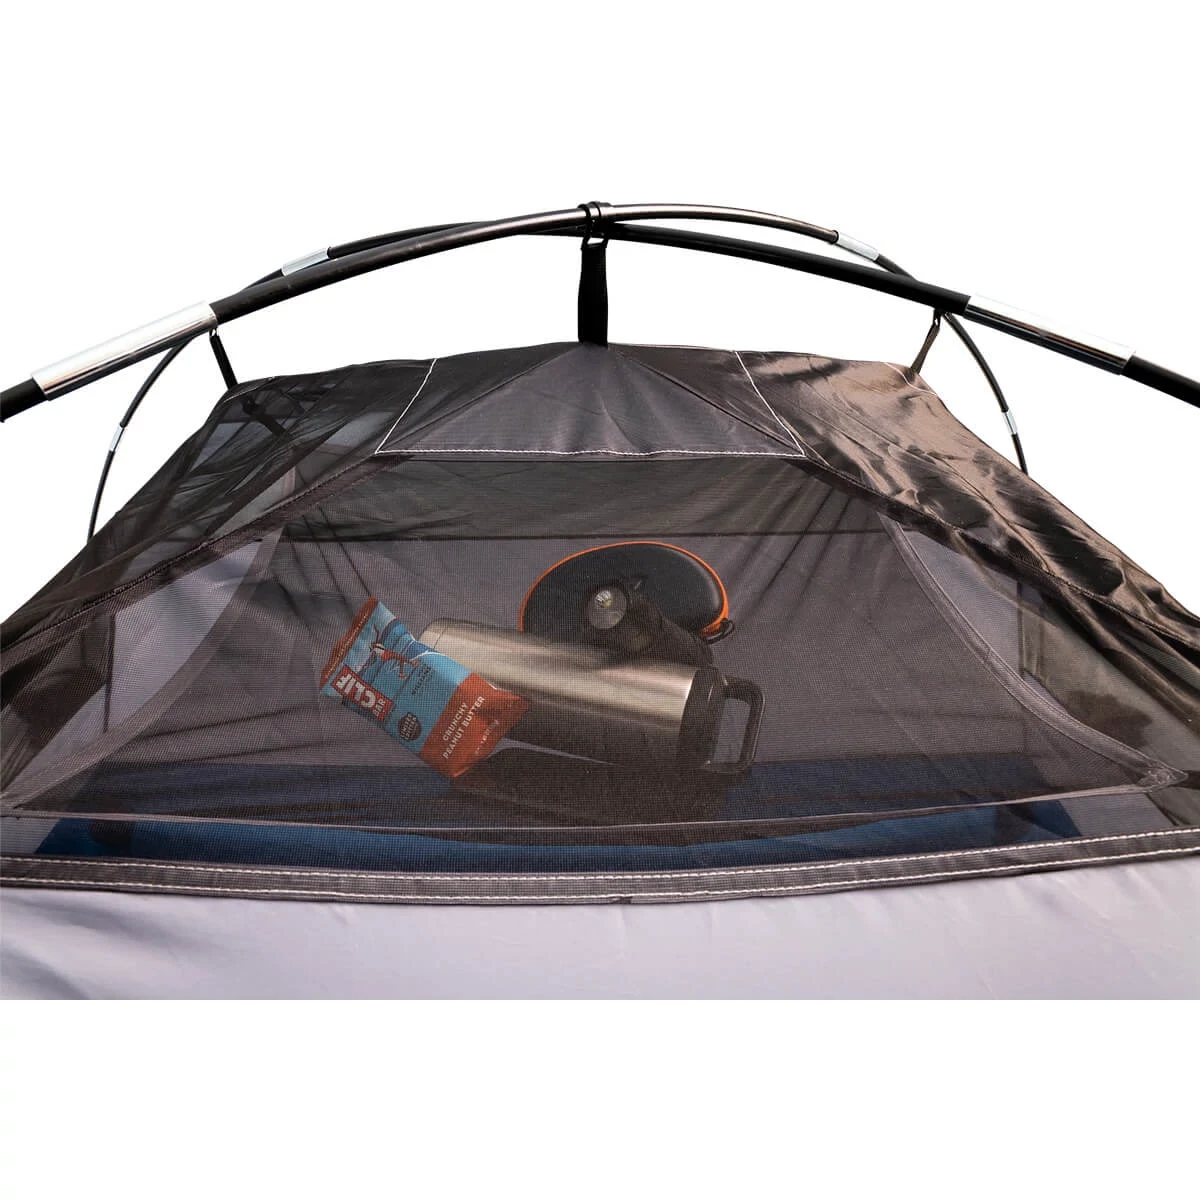 Tetragon NX tent gear hammock